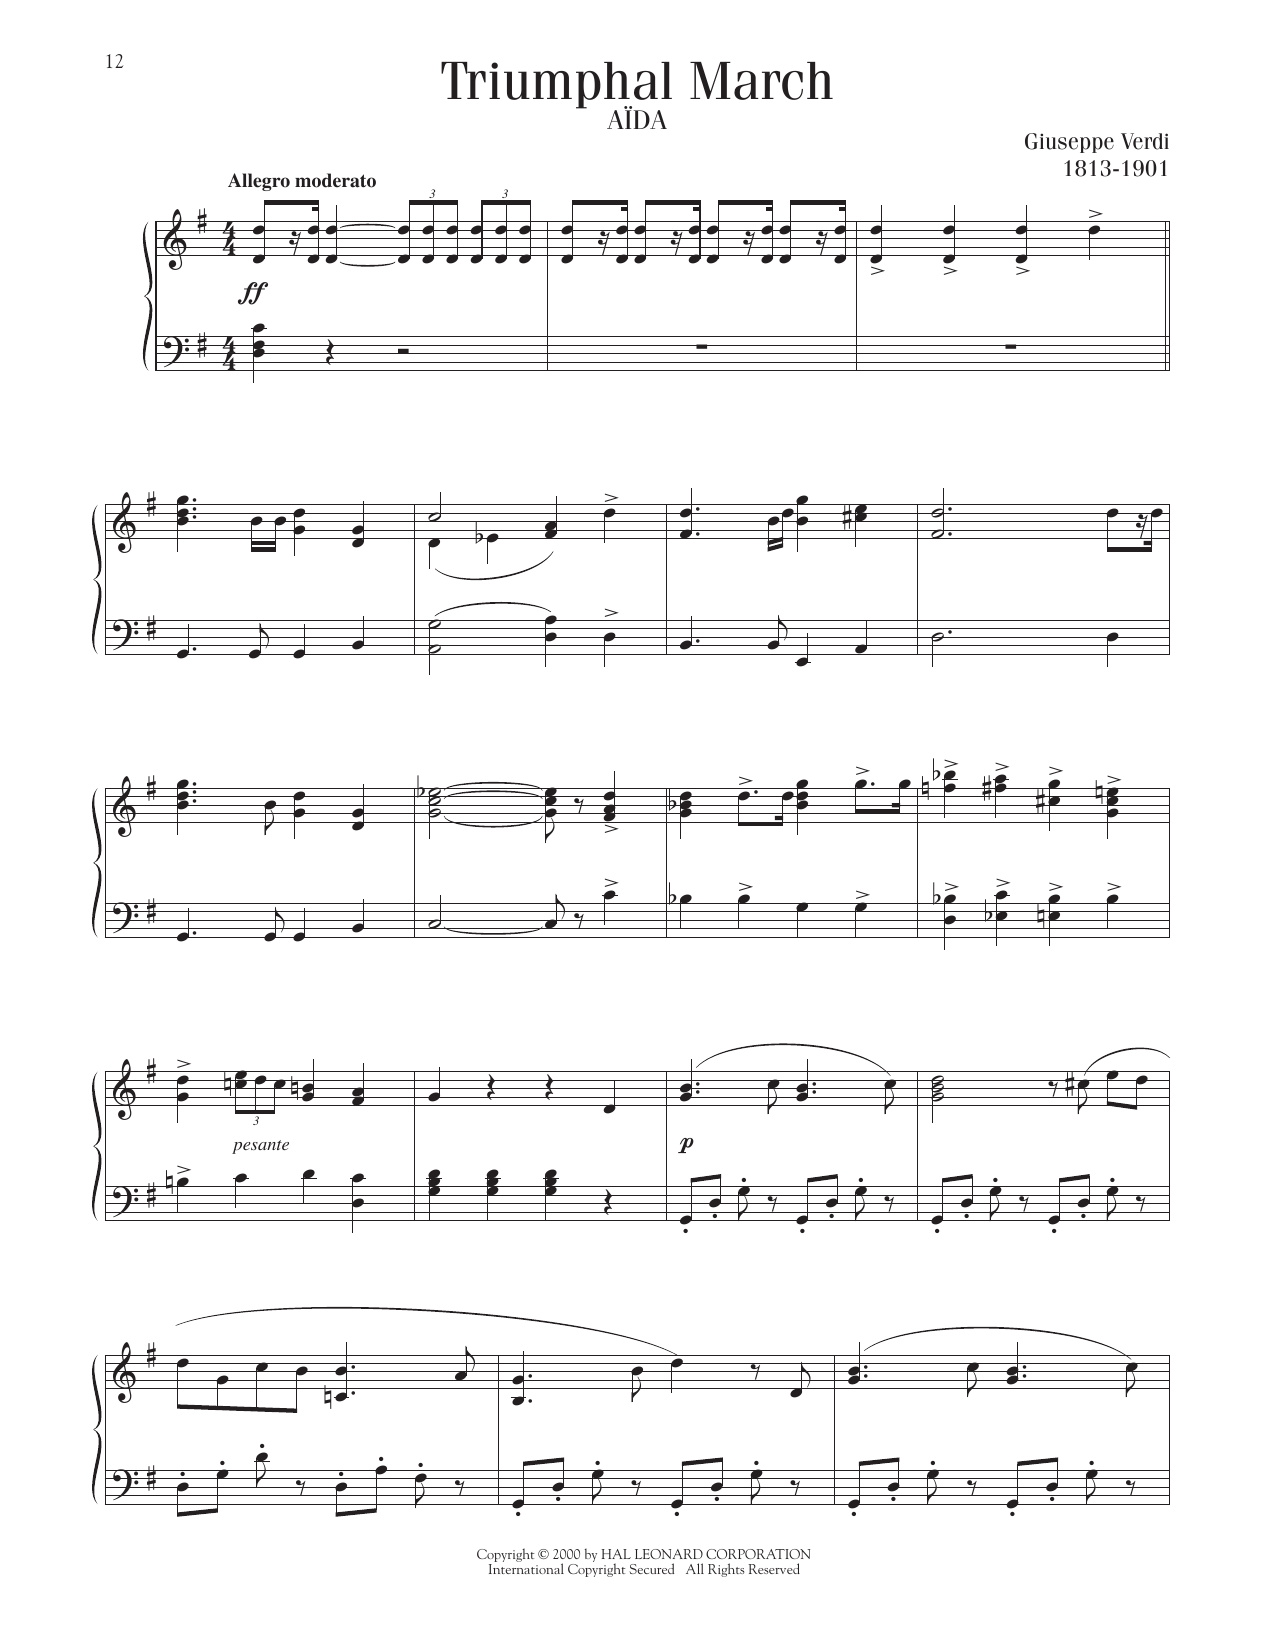 Giuseppe Verdi Triumphal March sheet music notes printable PDF score